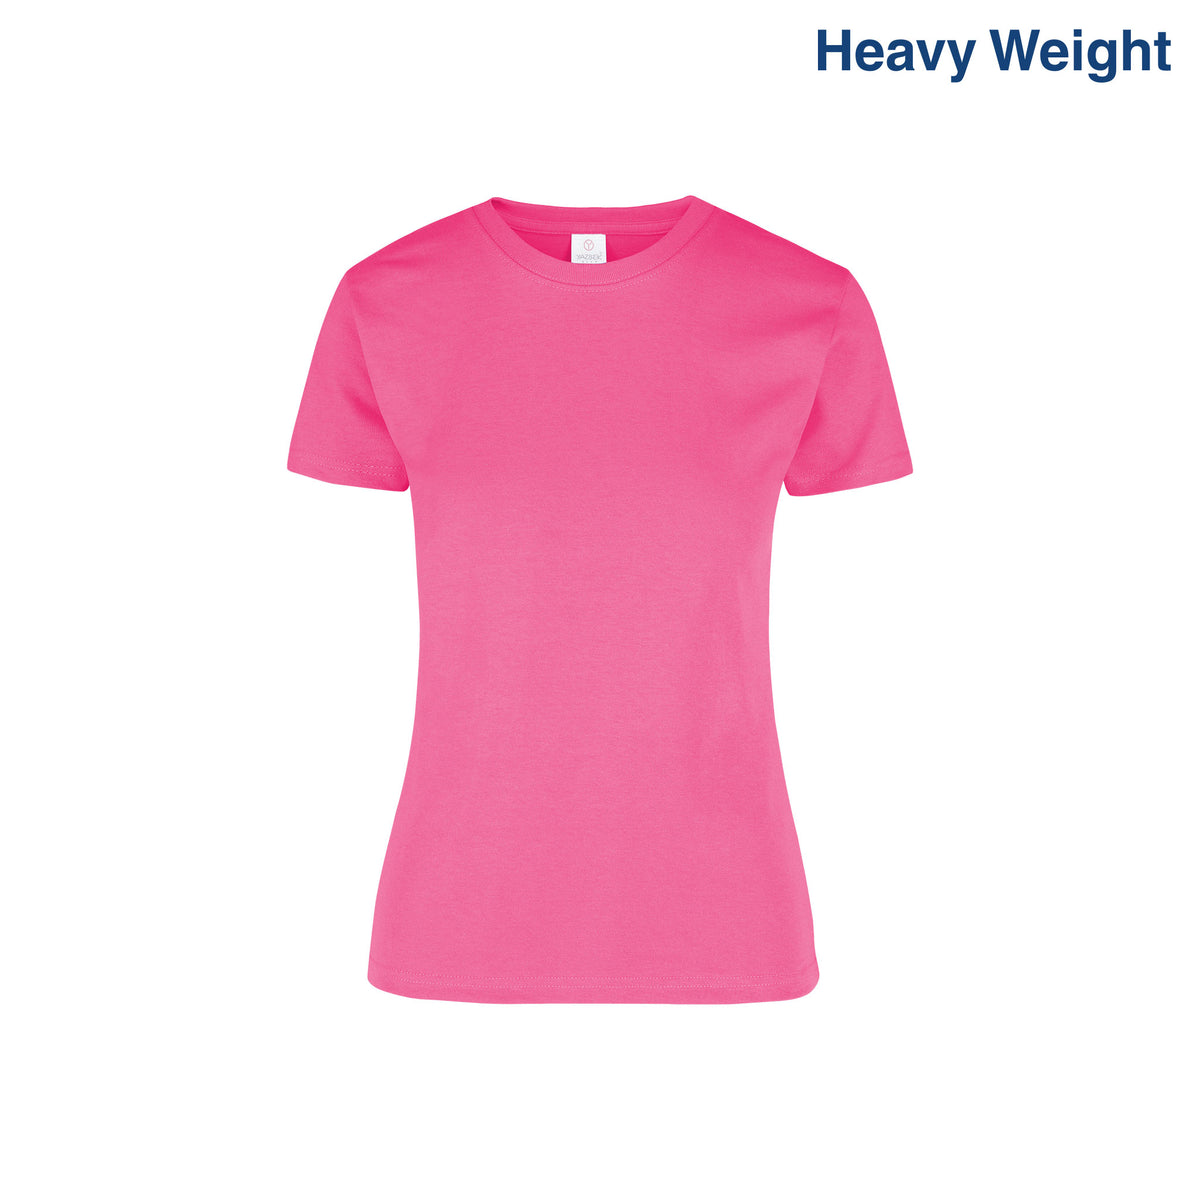 Women's Heavy Weight Crew Neck Short Sleeve Silhouette T-Shirt (Fuchsia)